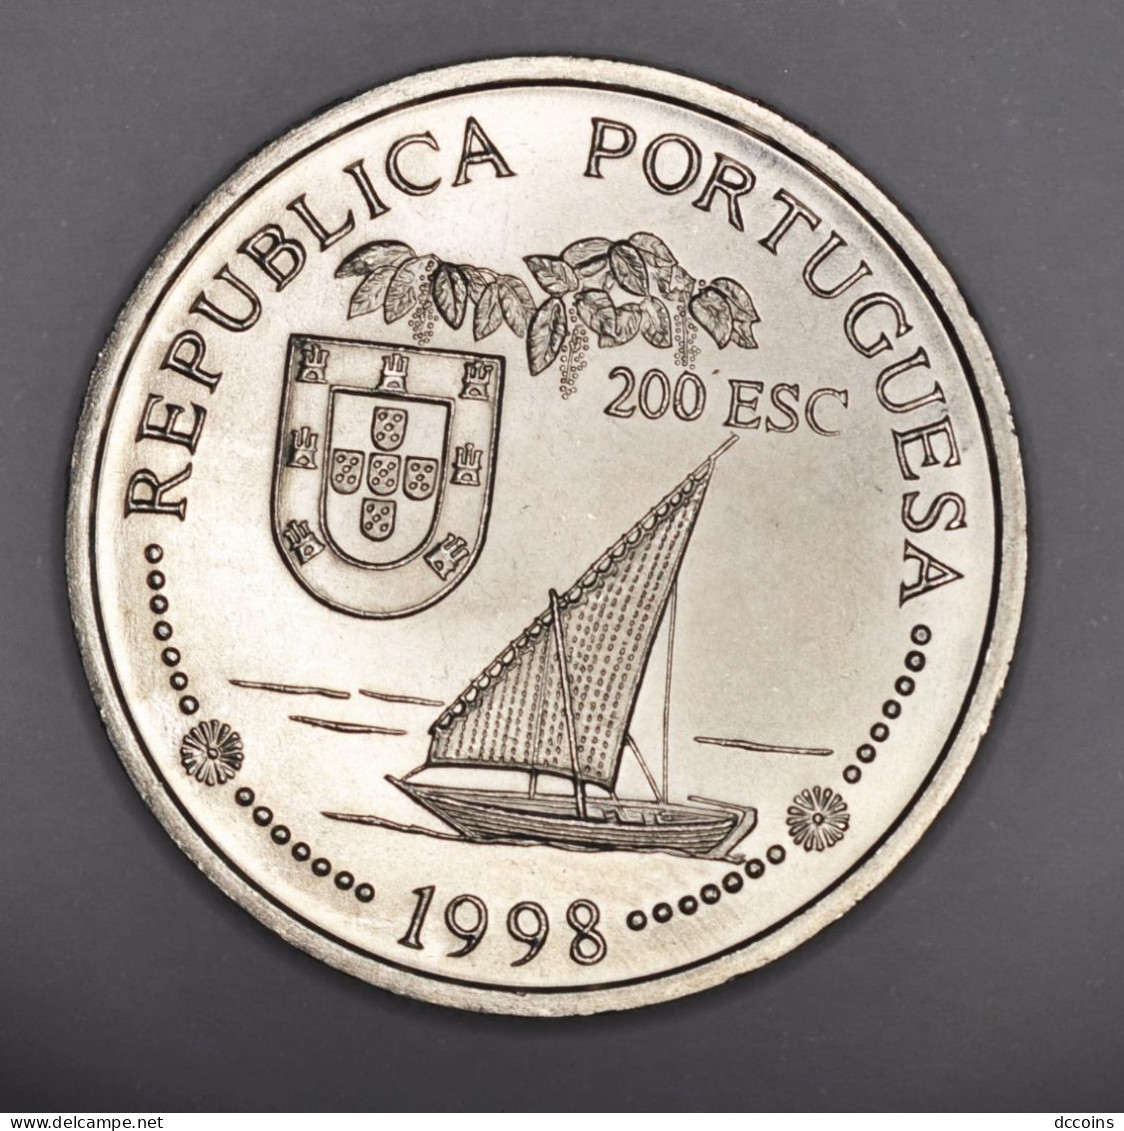 Descobrimentos Portugueses 9ª Serie 200  Esc. India Year 1998 - Portugal